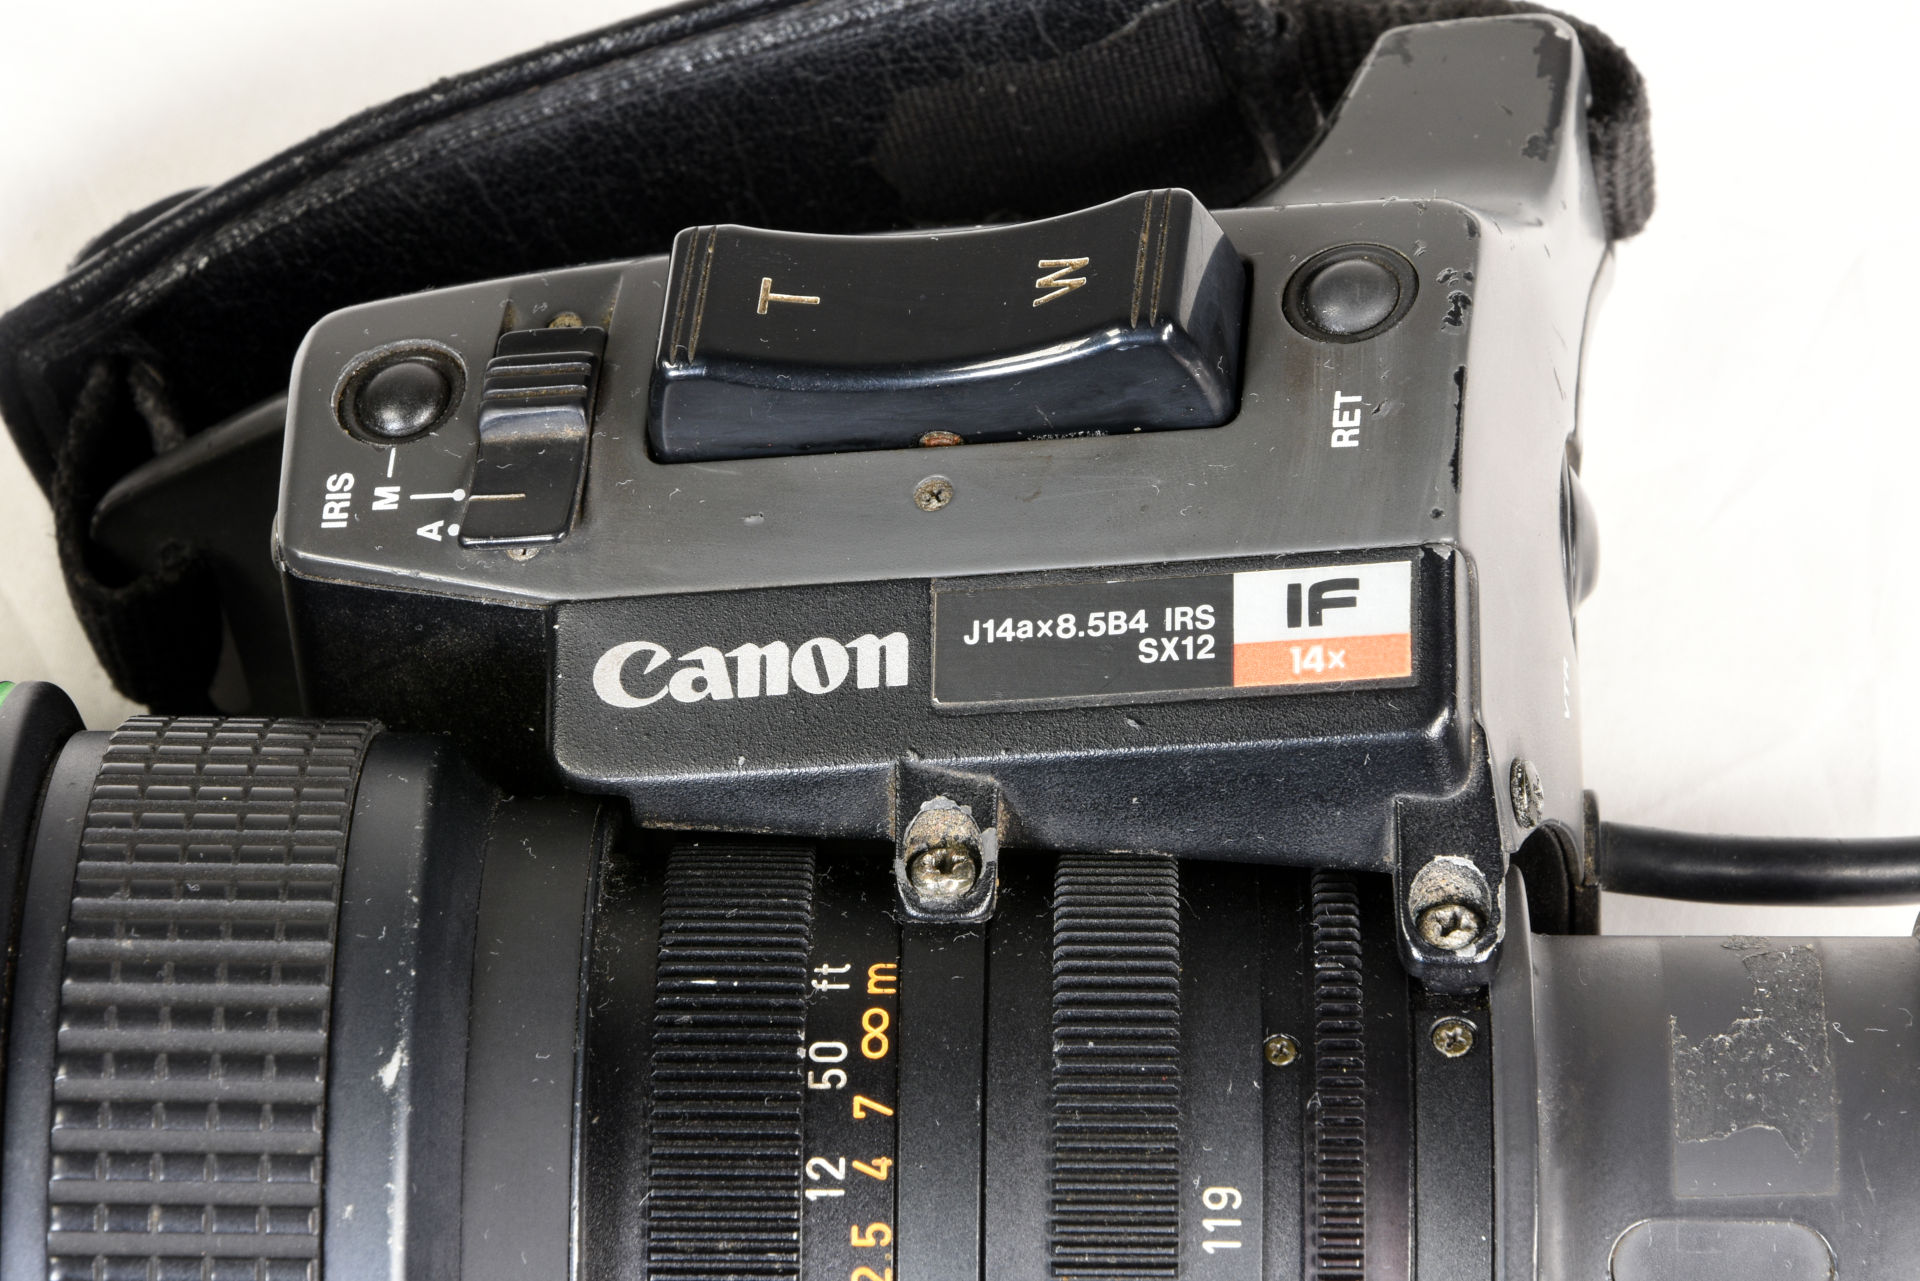 2/3” 14x SD Broadcast lens Canon J14ax8.5B4 IRS SX12 